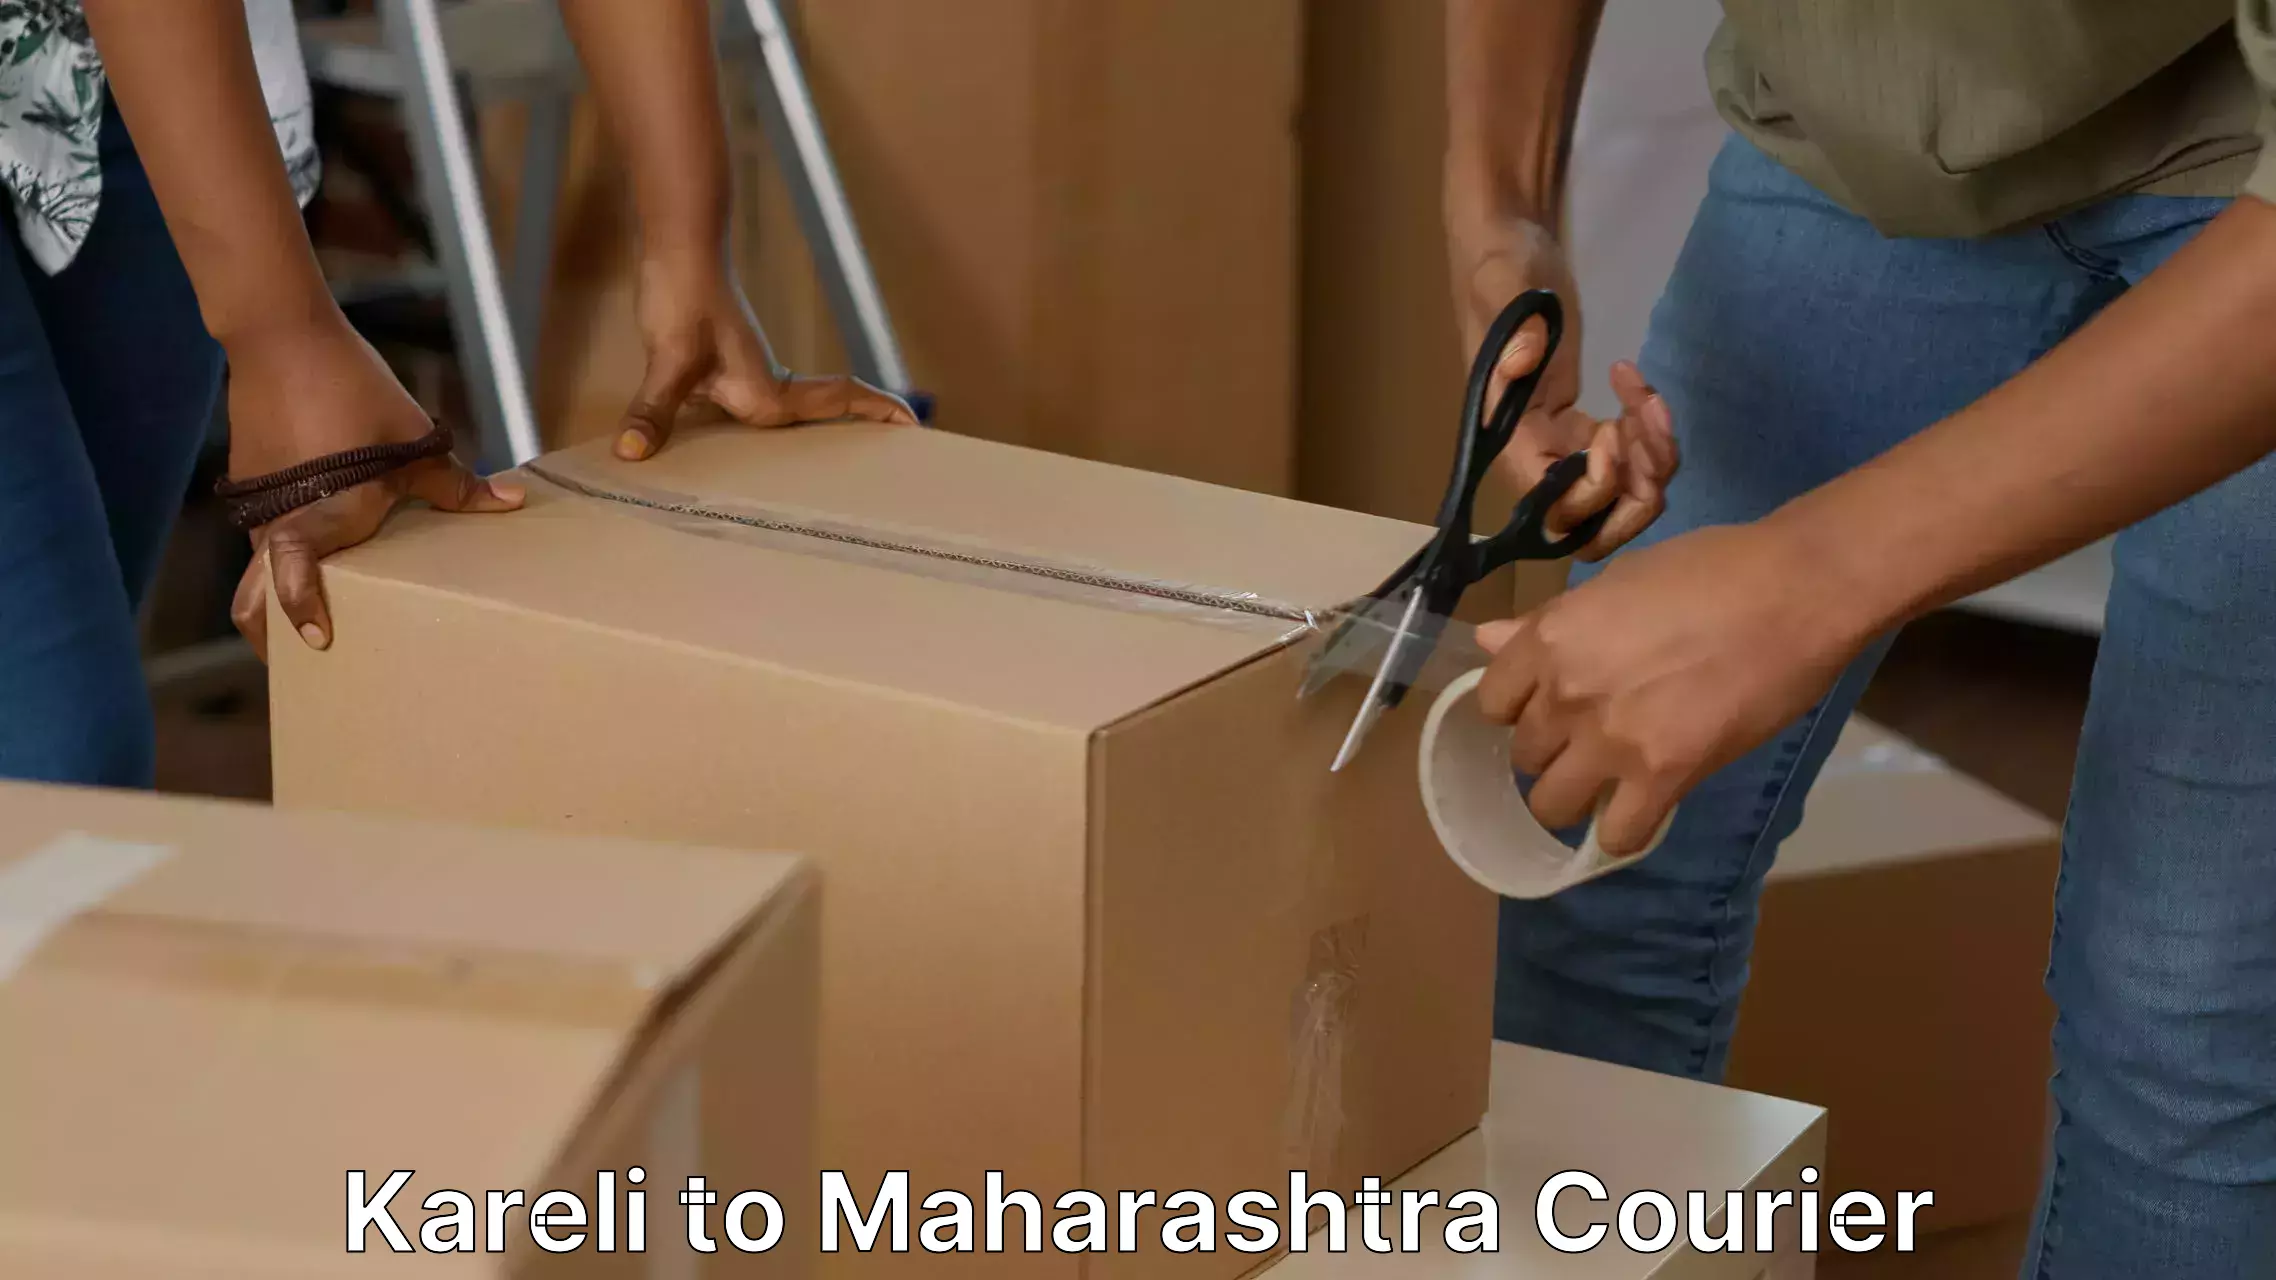 Professional movers and packers Kareli to Maharashtra